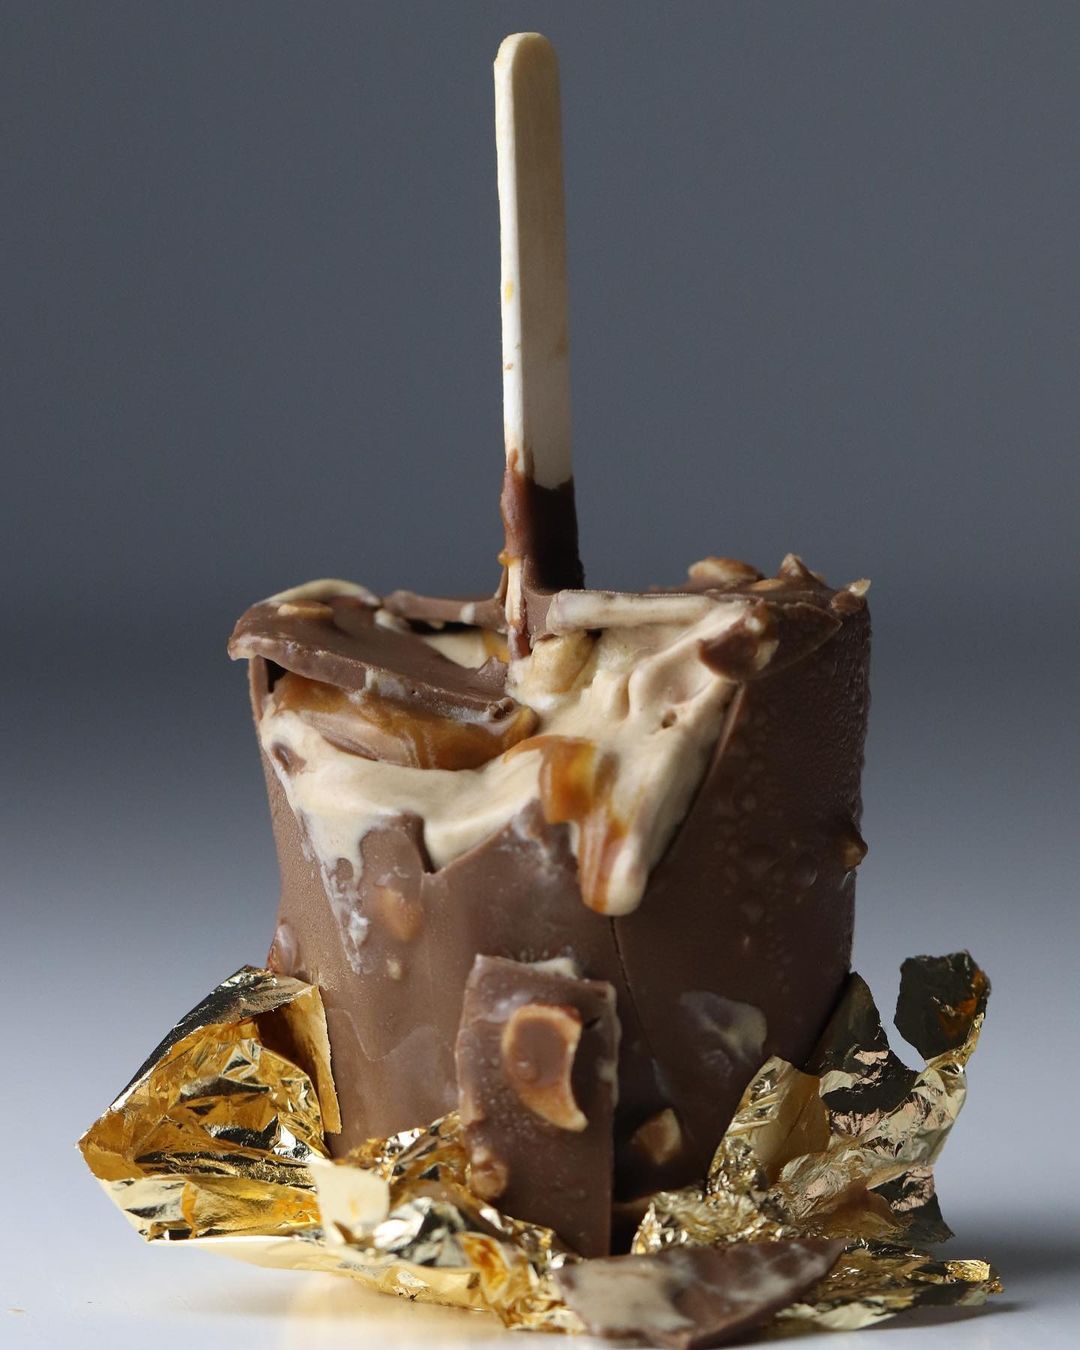 Hazelnut ice cream with chocolate